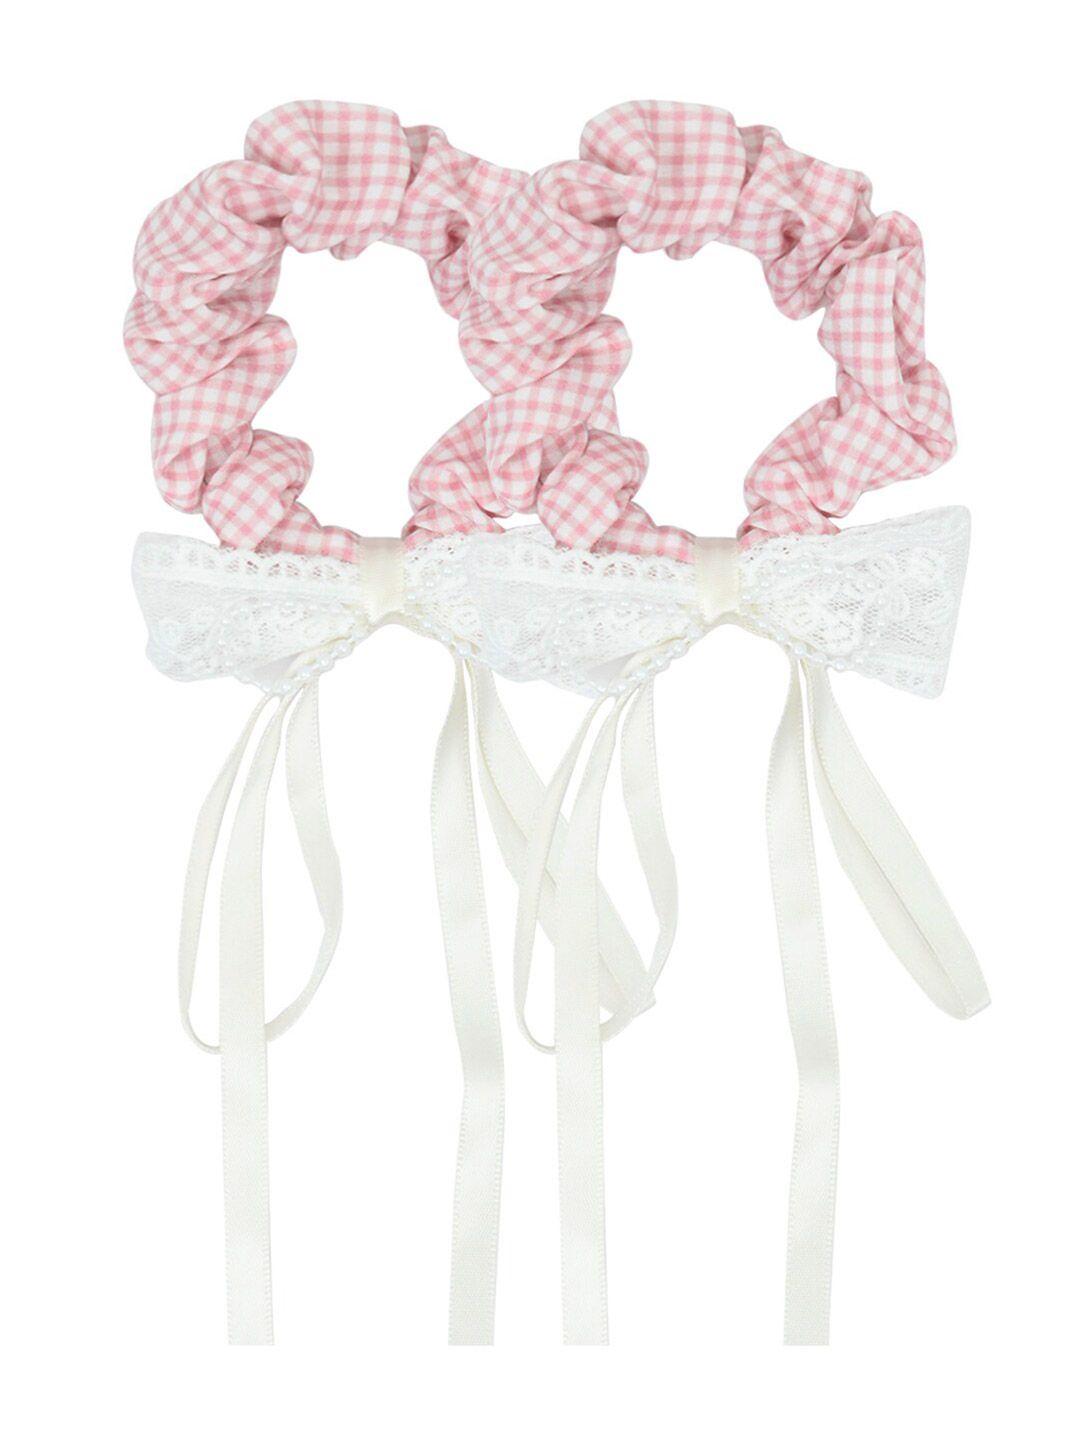 funkrafts-girls-pink-&-white-set-of-2-lace-hair-accessory-set